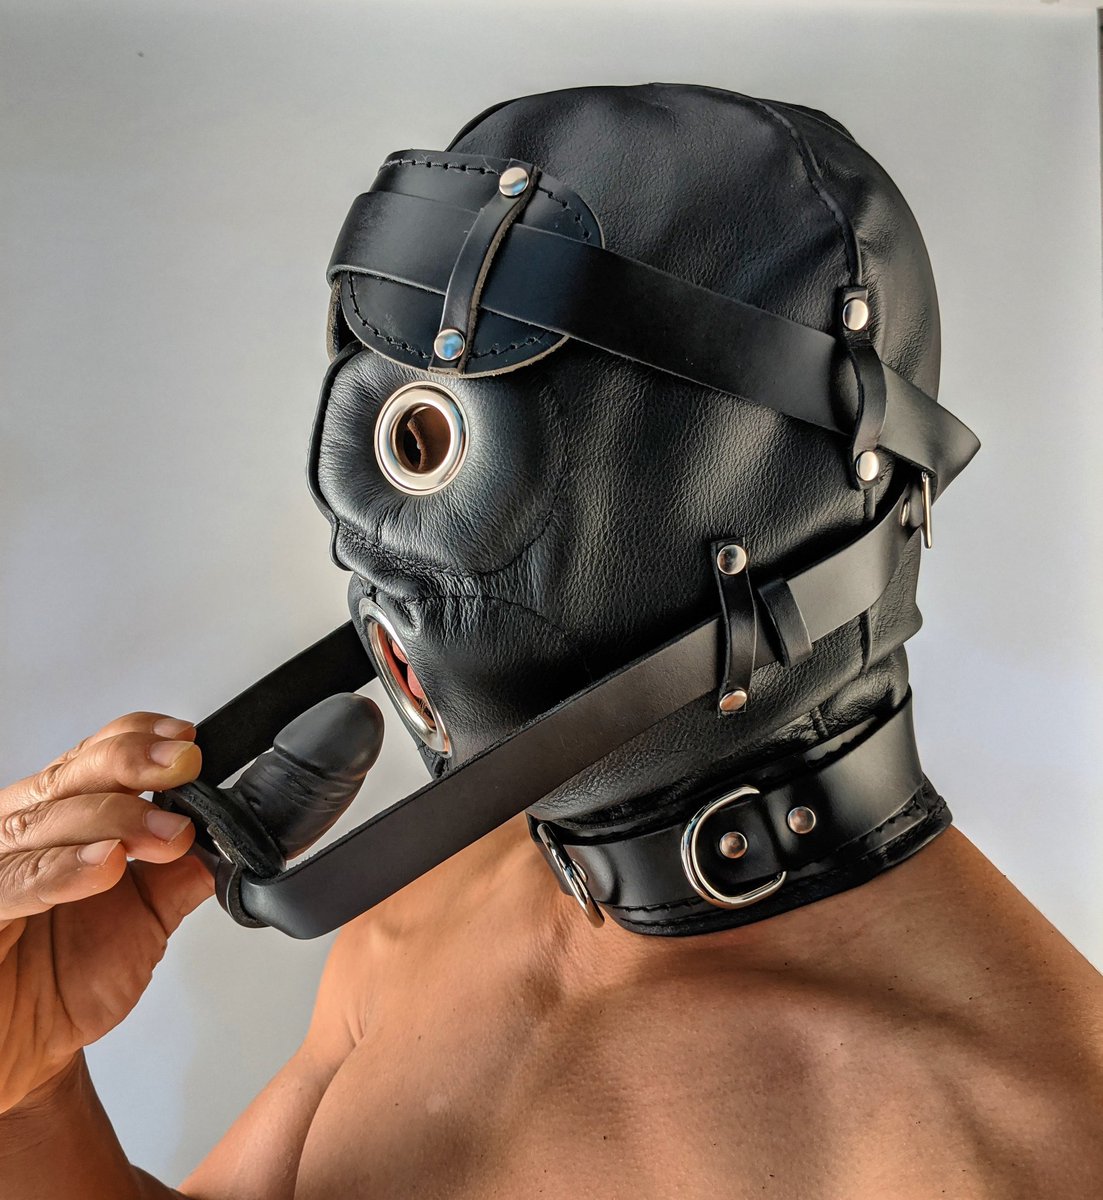 FORFUN on Twitter: "Ready to be gimp 🎭 FORFUN Leather mask  https://t.co/WNxR9U9OGa #forfun #forfunbangkok… "